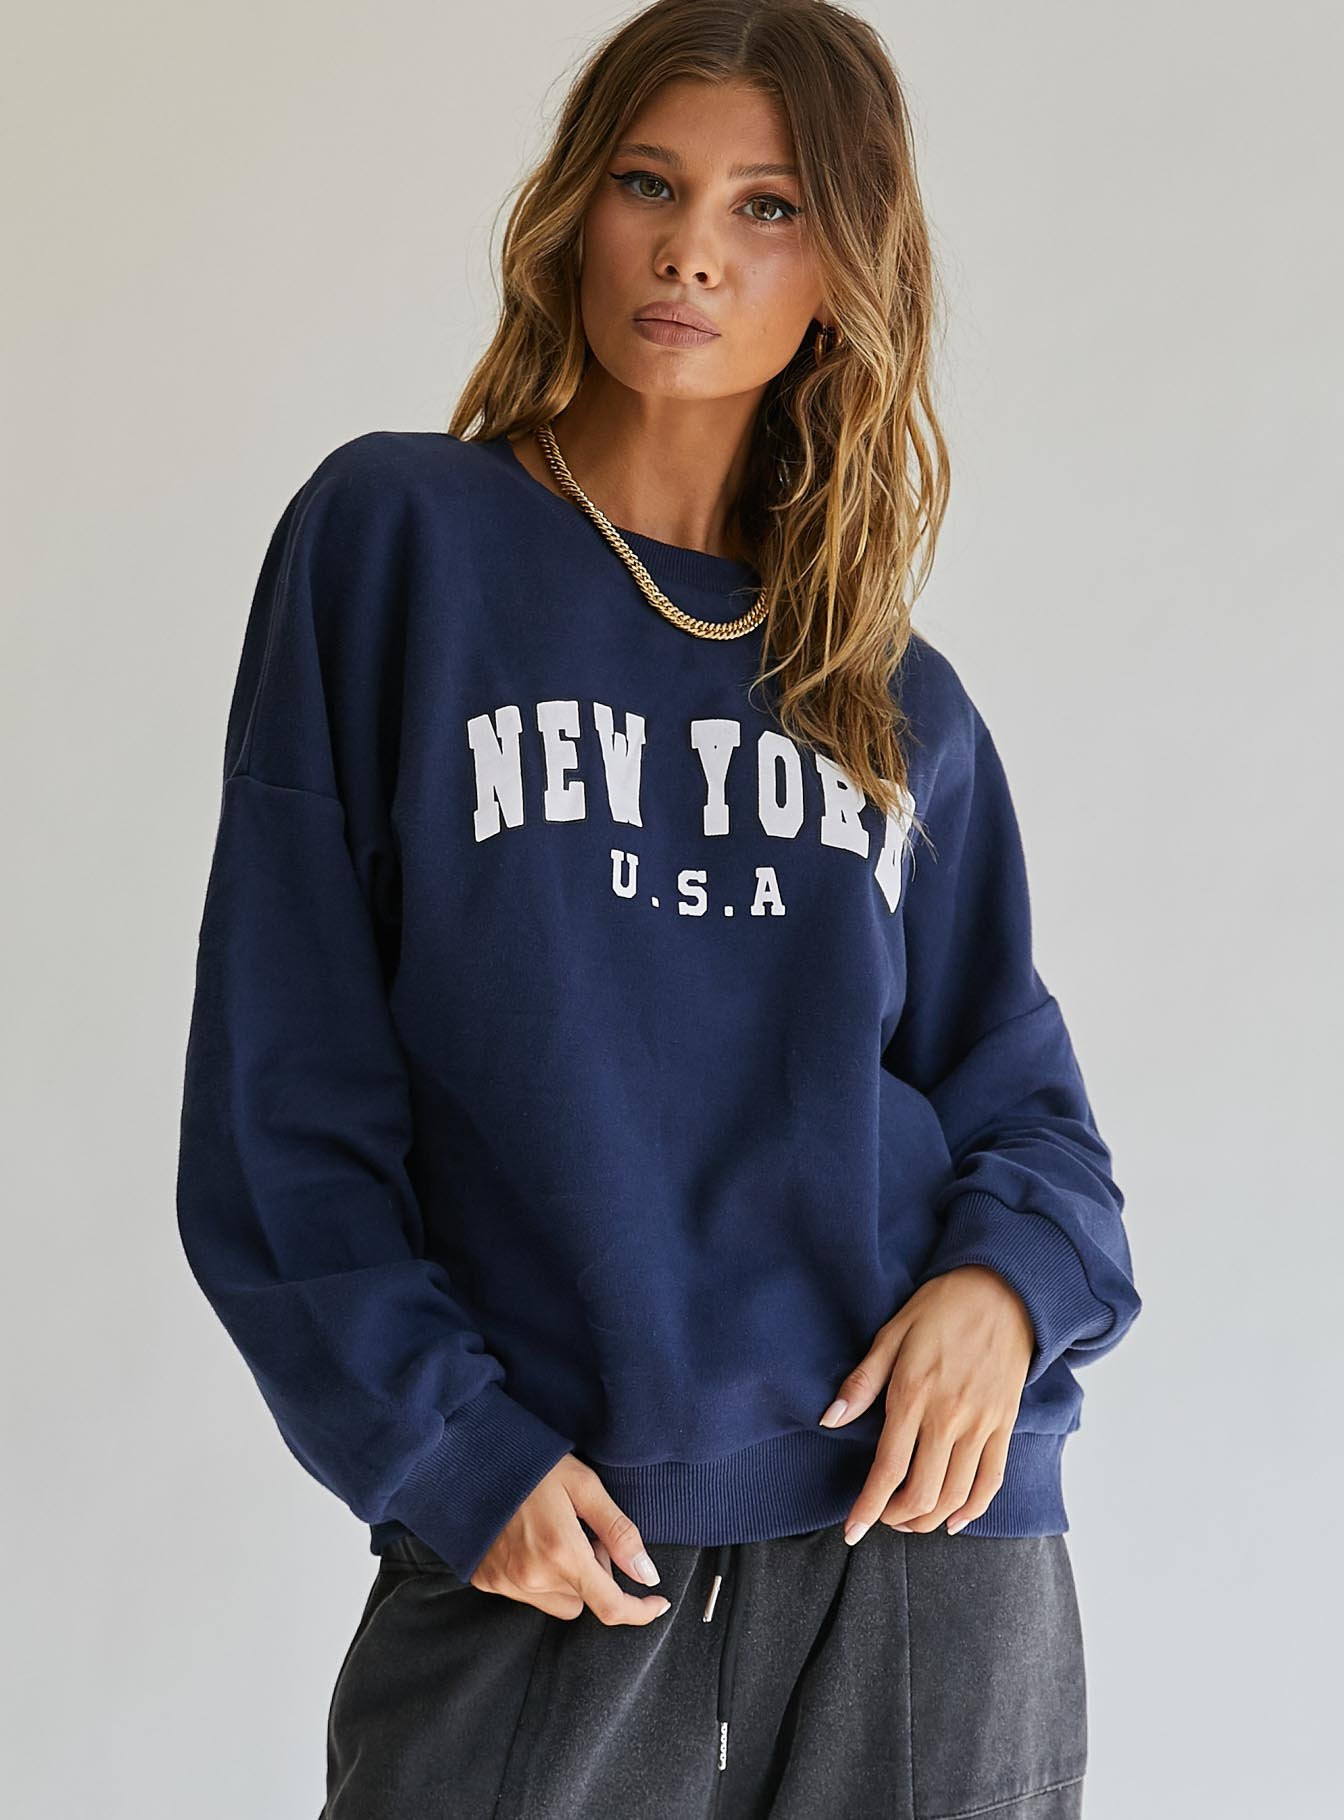 NEW YORK Navy Blue Sweater 